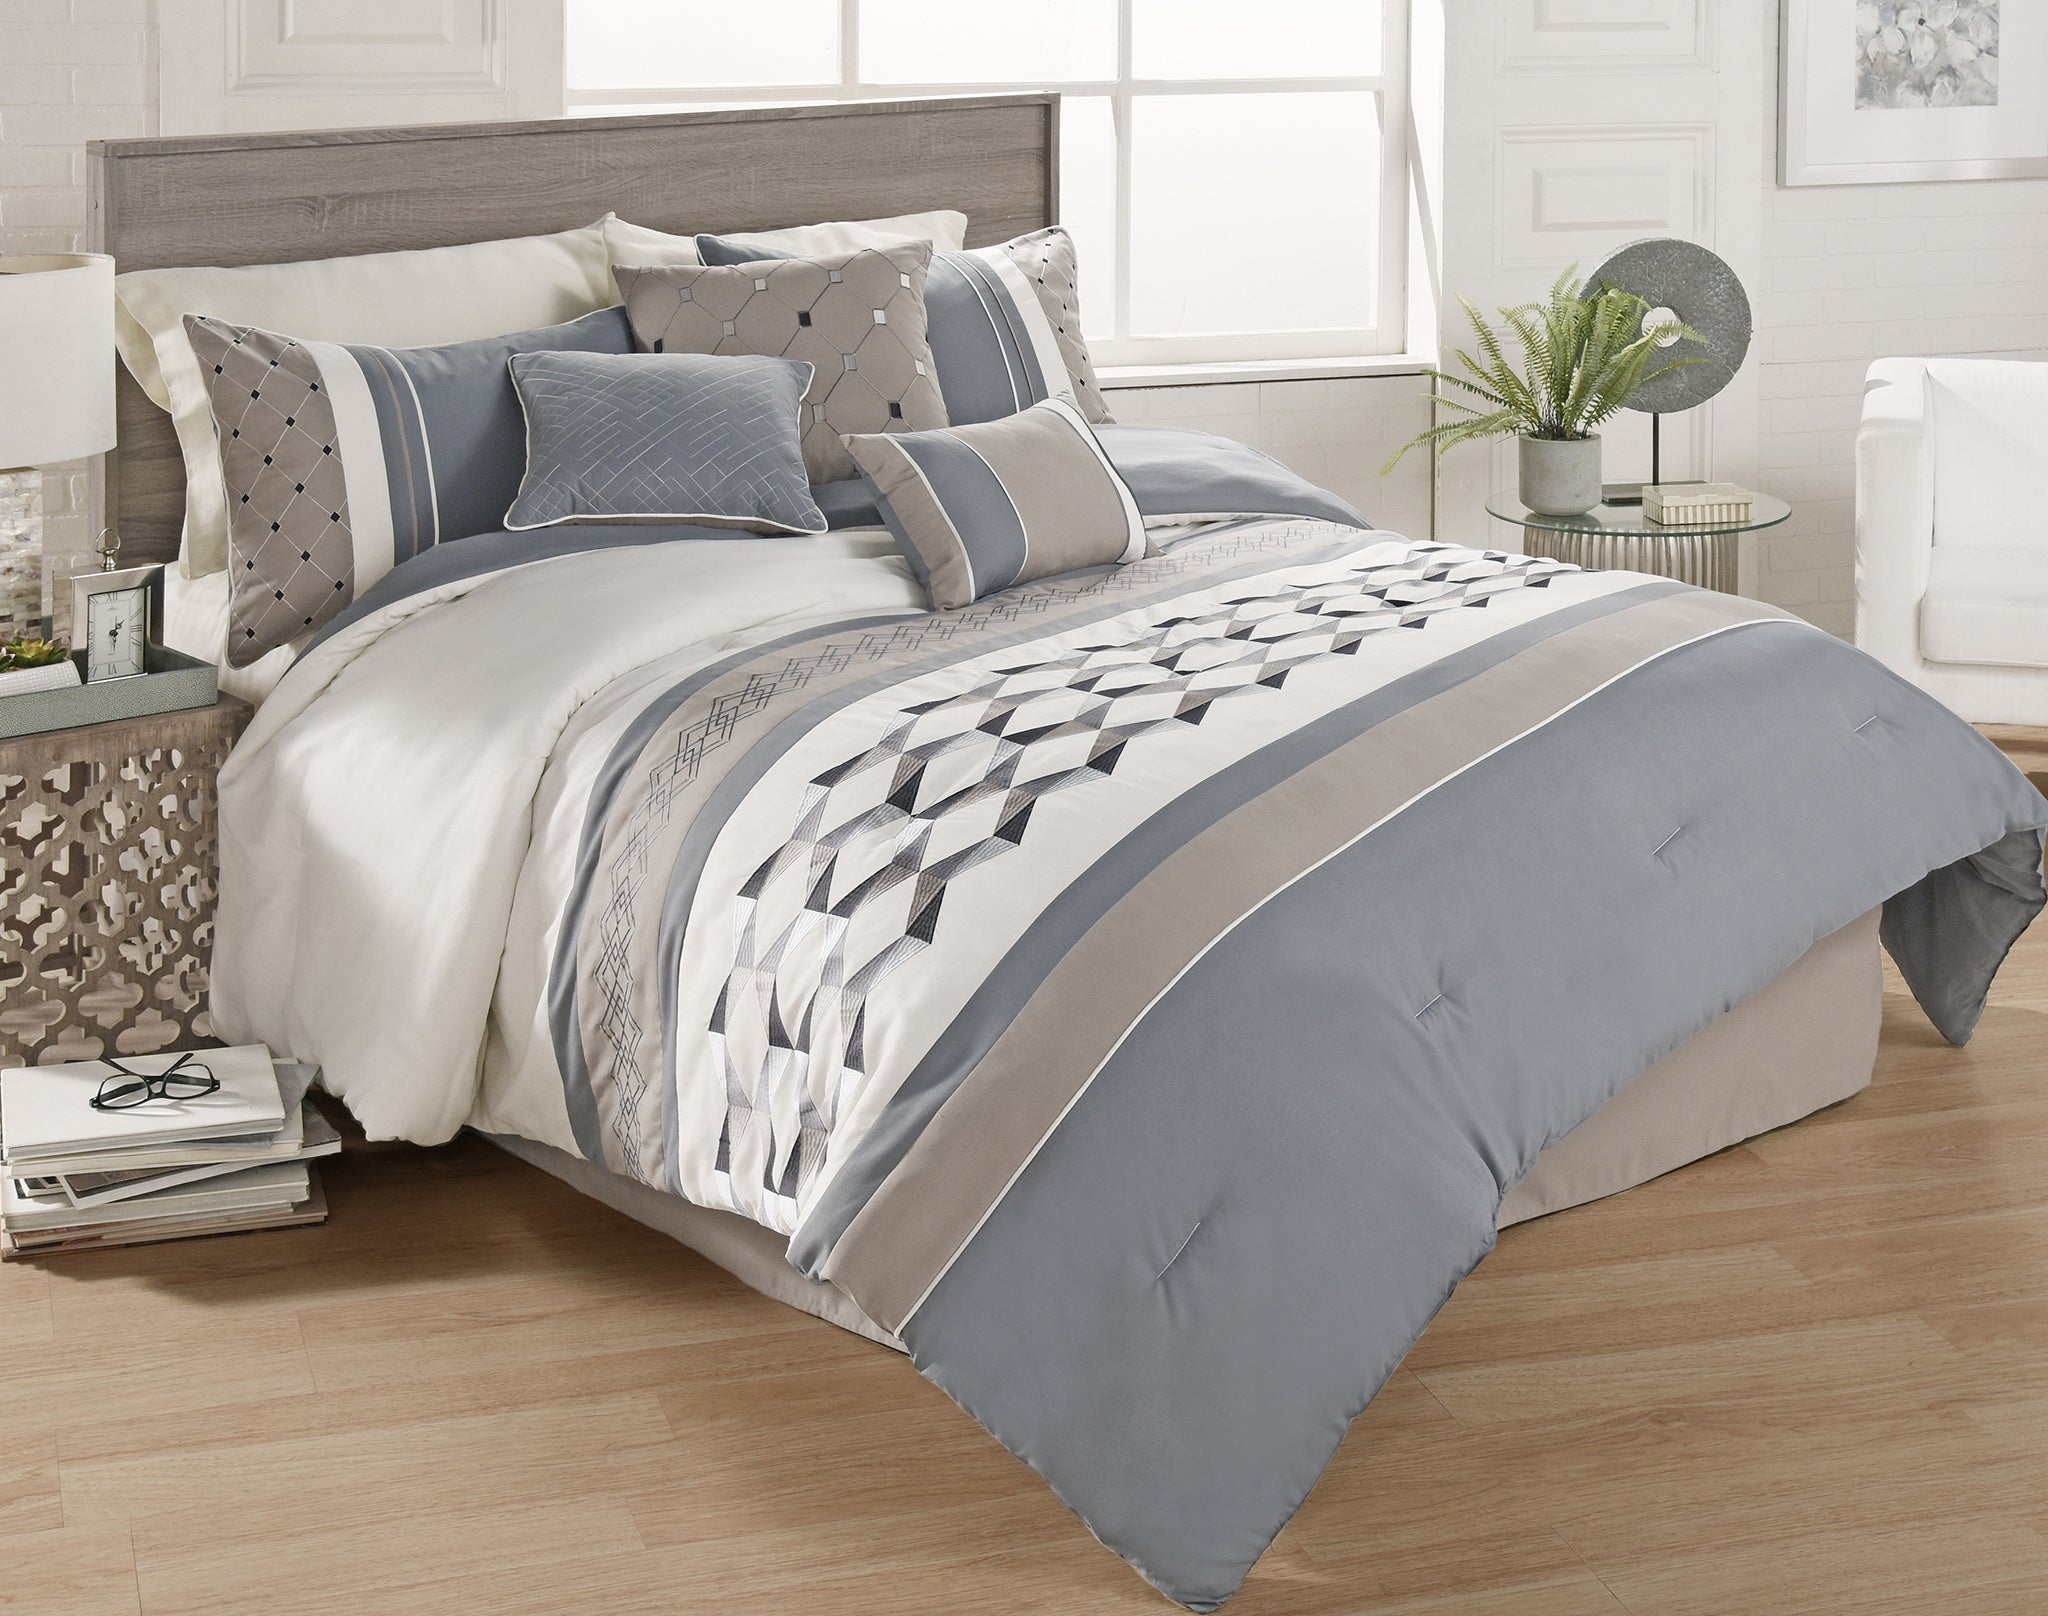 Hallmart Collectibles Bedding Finnette 7-Pc KING Comforter Set $240 H225 